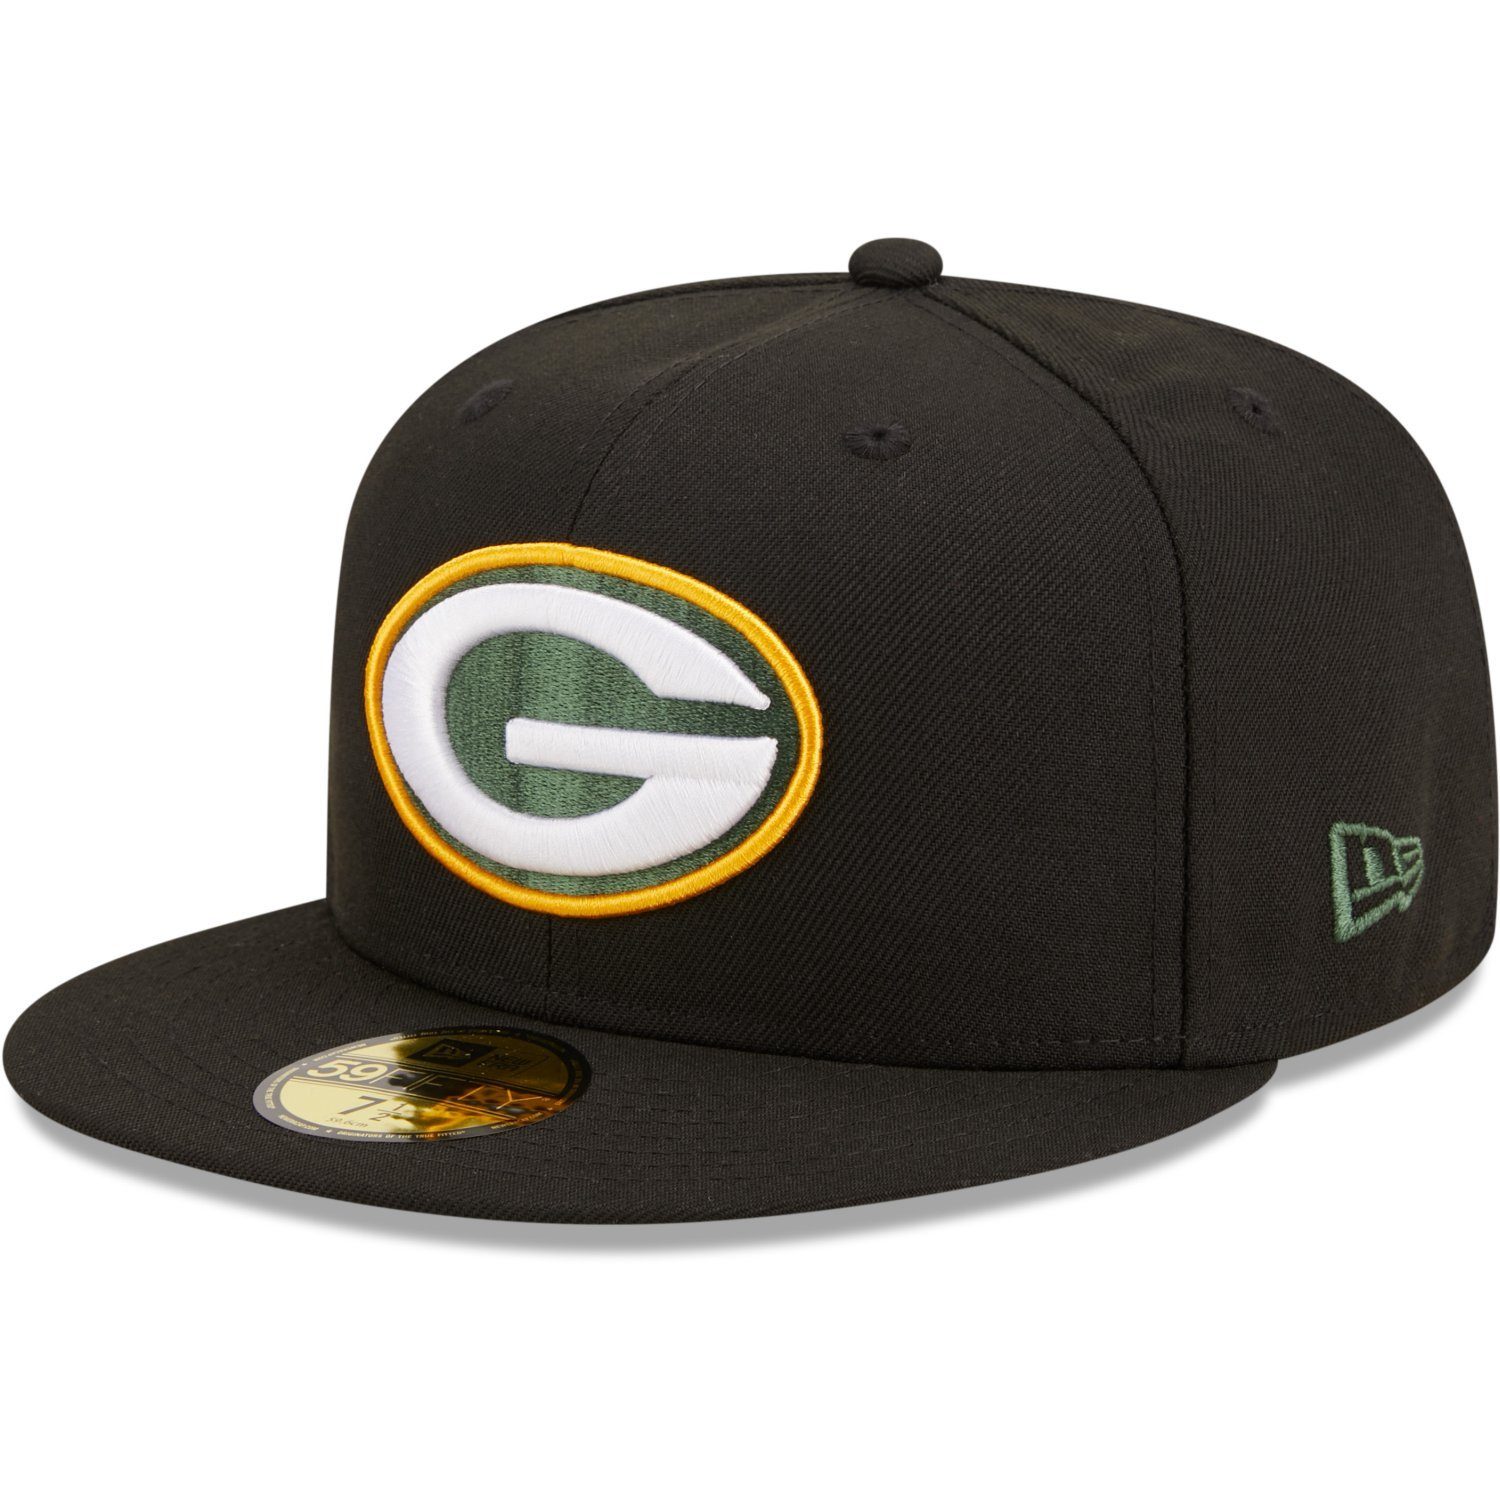 New Era Fitted Field Packers Green Bay Lambeau Cap 59Fifty